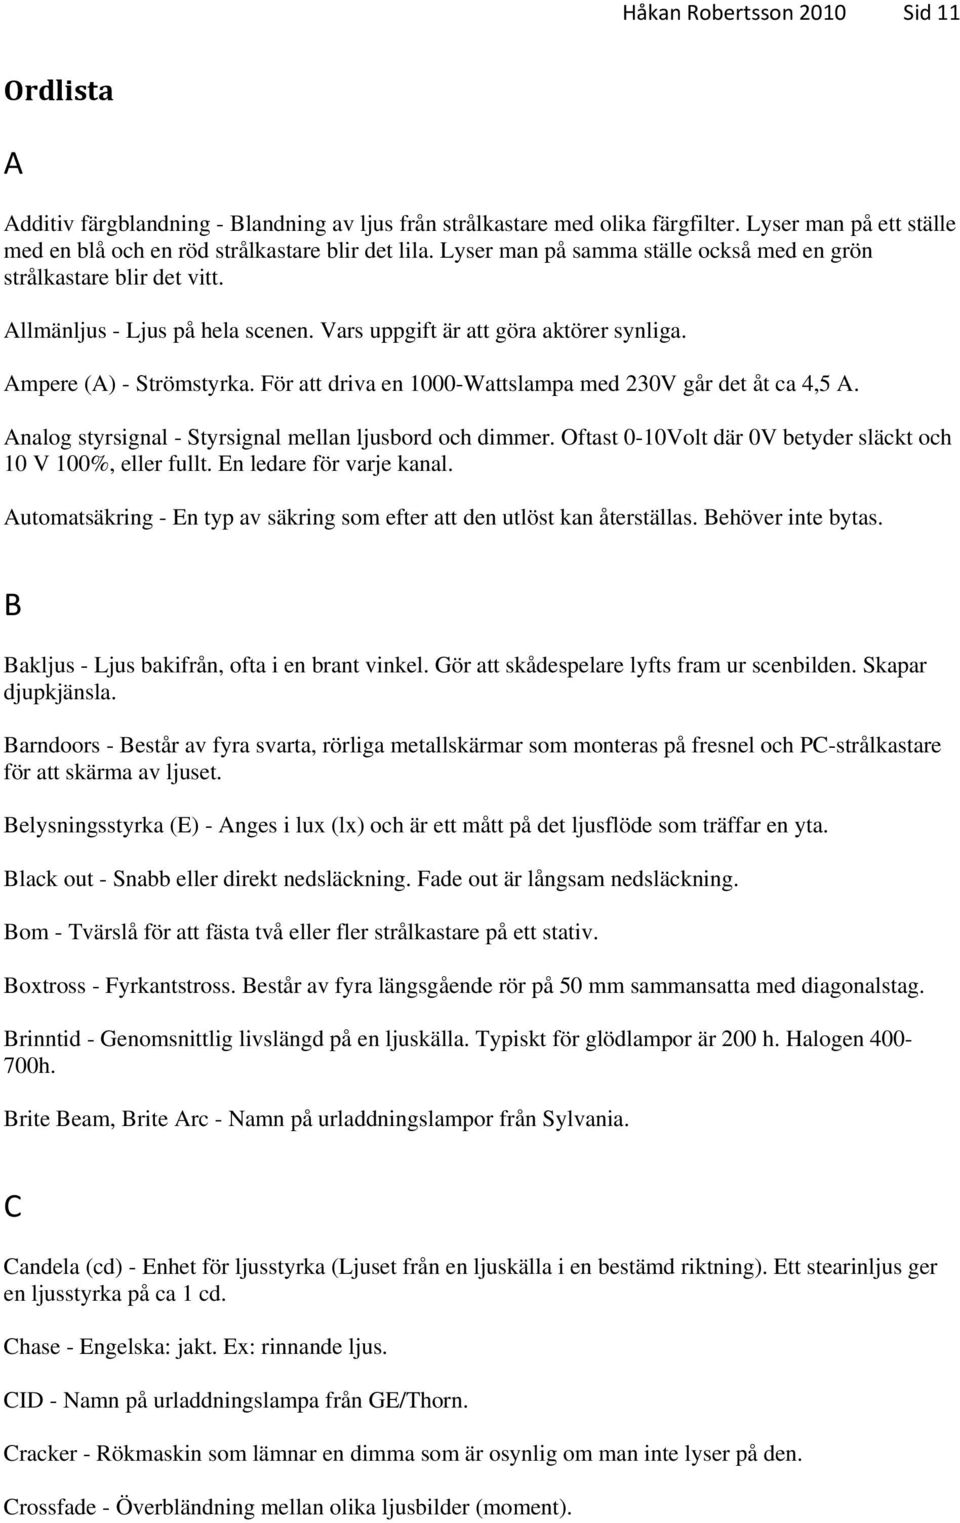 Teaterljus. Håkan Robertsson 2010 Sid 1 - PDF Free Download